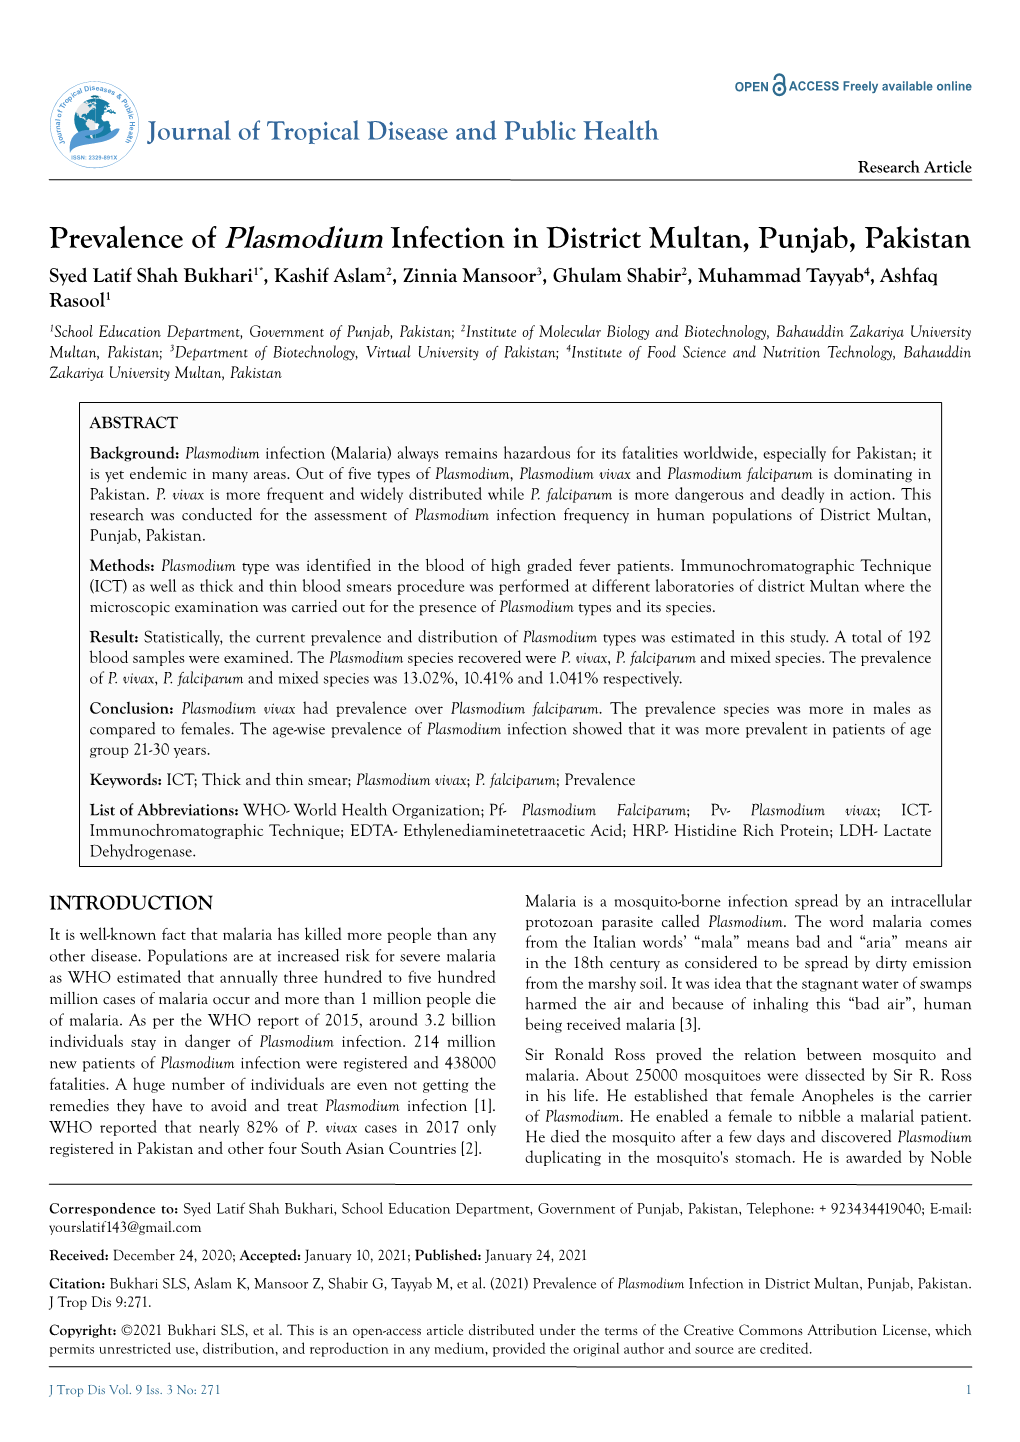 Prevalence of Plasmodium Infection in District Multan, Punjab, Pakistan